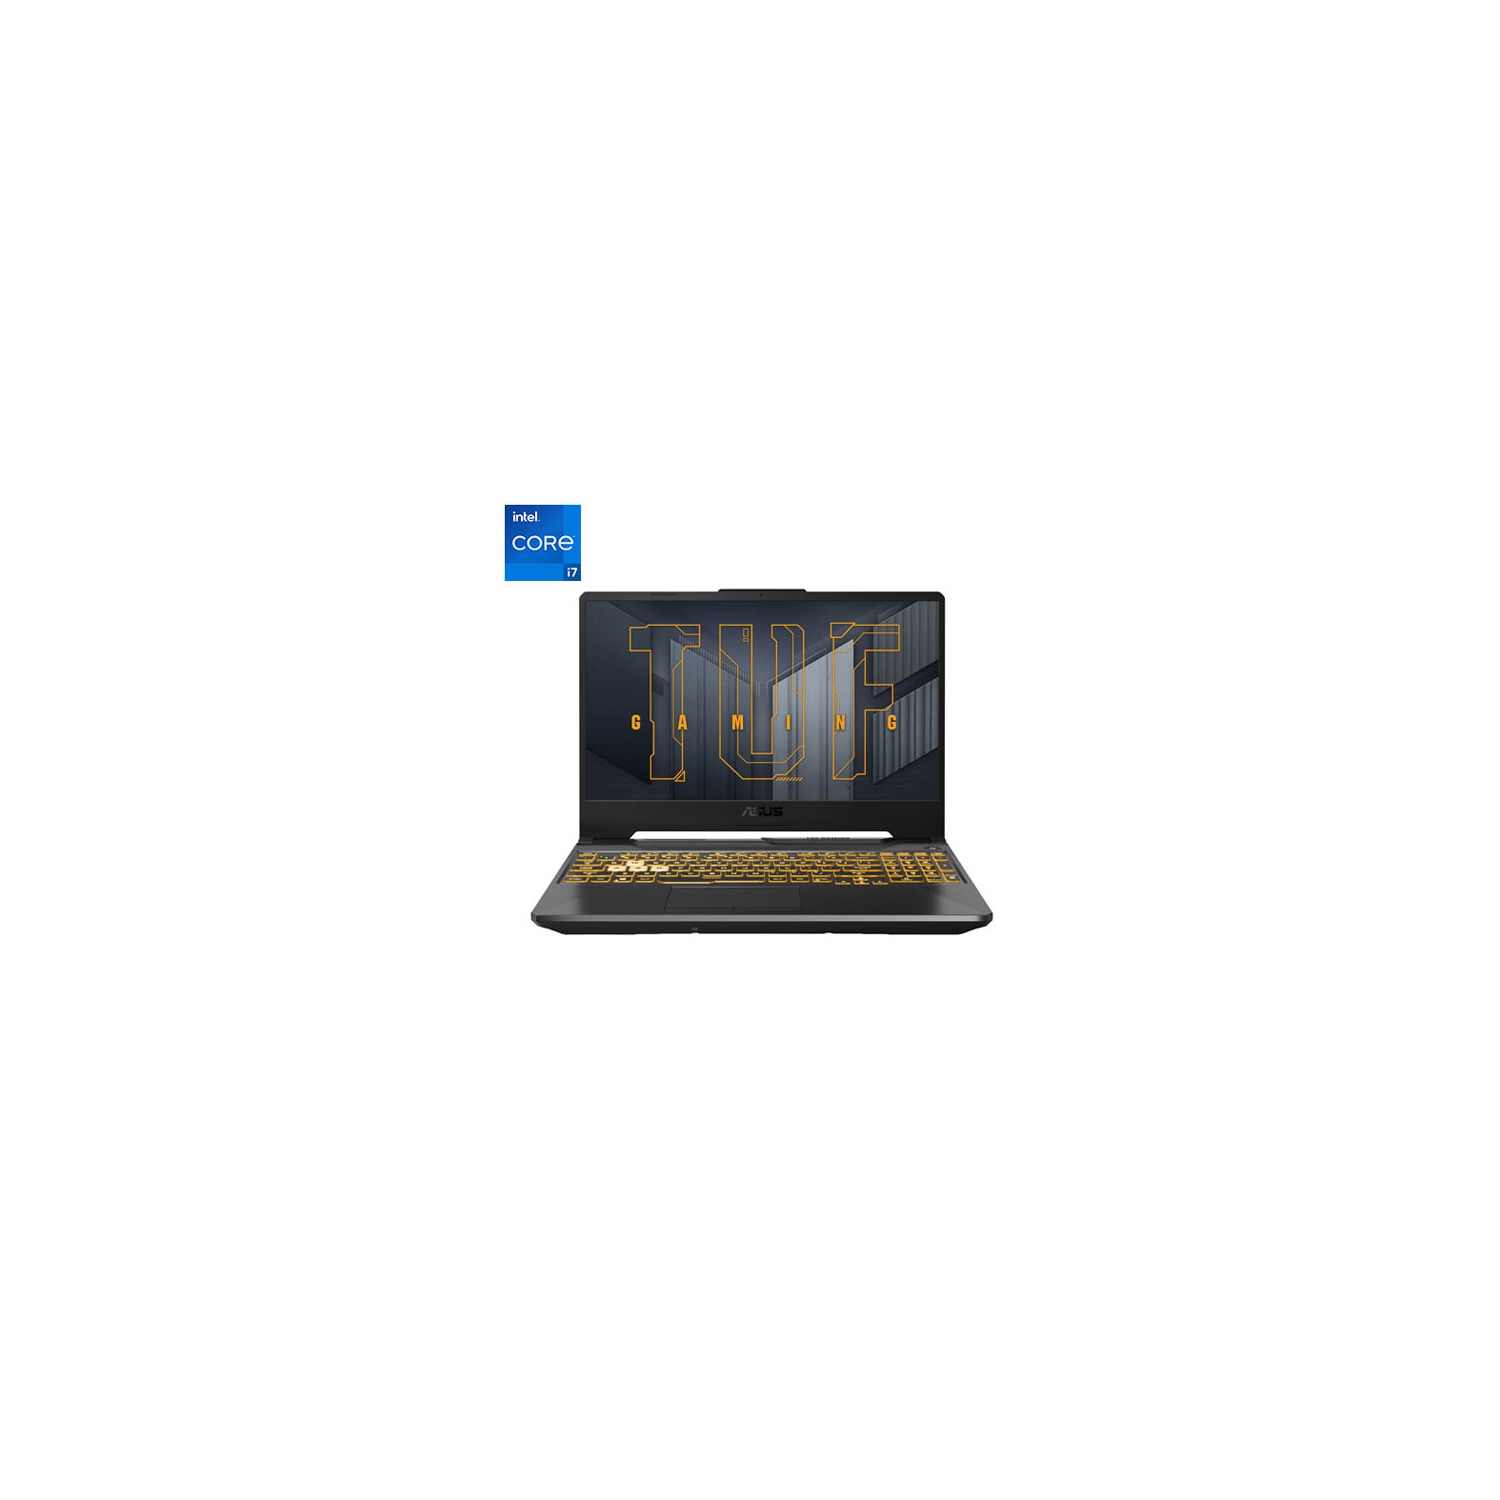 Refurbished (Good) - ASUS TUF F15 15.6" Gaming Laptop - Grey (Intel Core i7-11800H/512GB SSD/16GB RAM/RTX 3060/Win10)